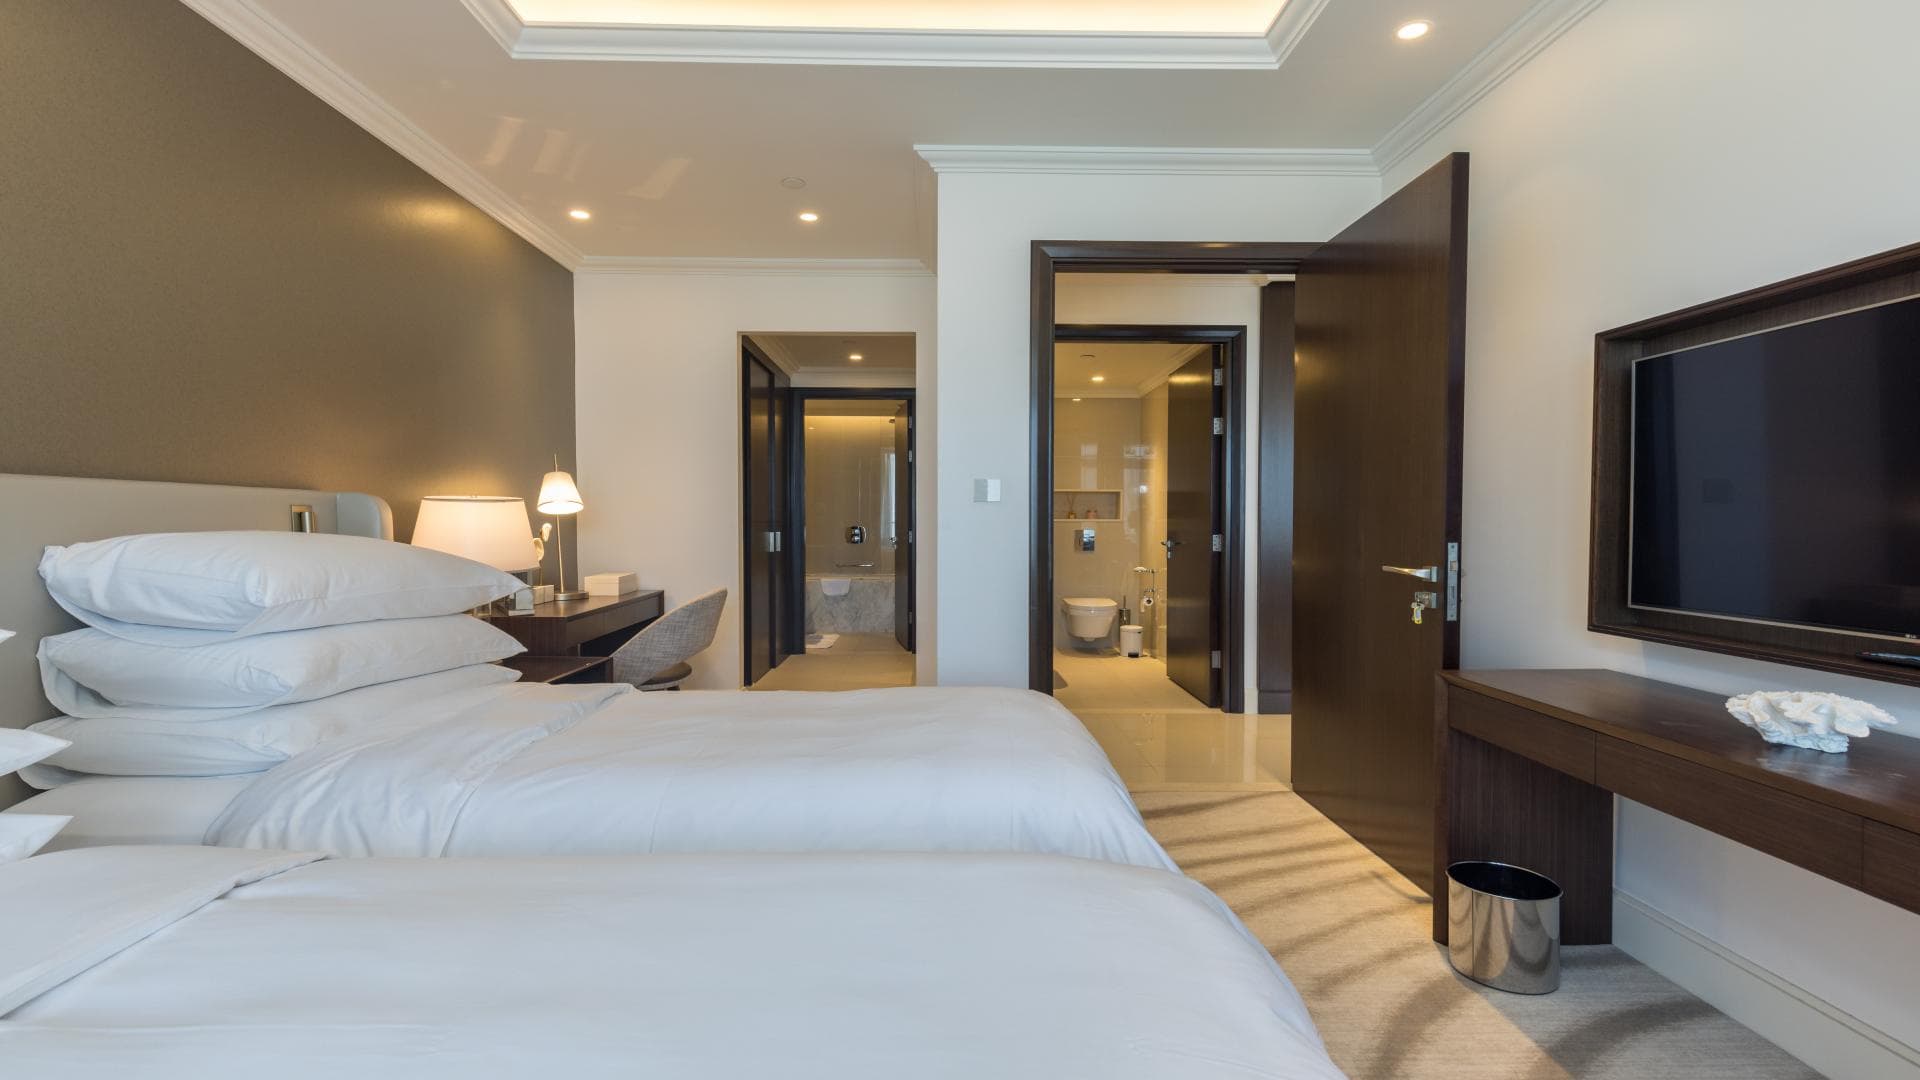 3 Bedroom Apartment For Rent Marina View Tower B Lp35982 31c528934b3c9400.jpg